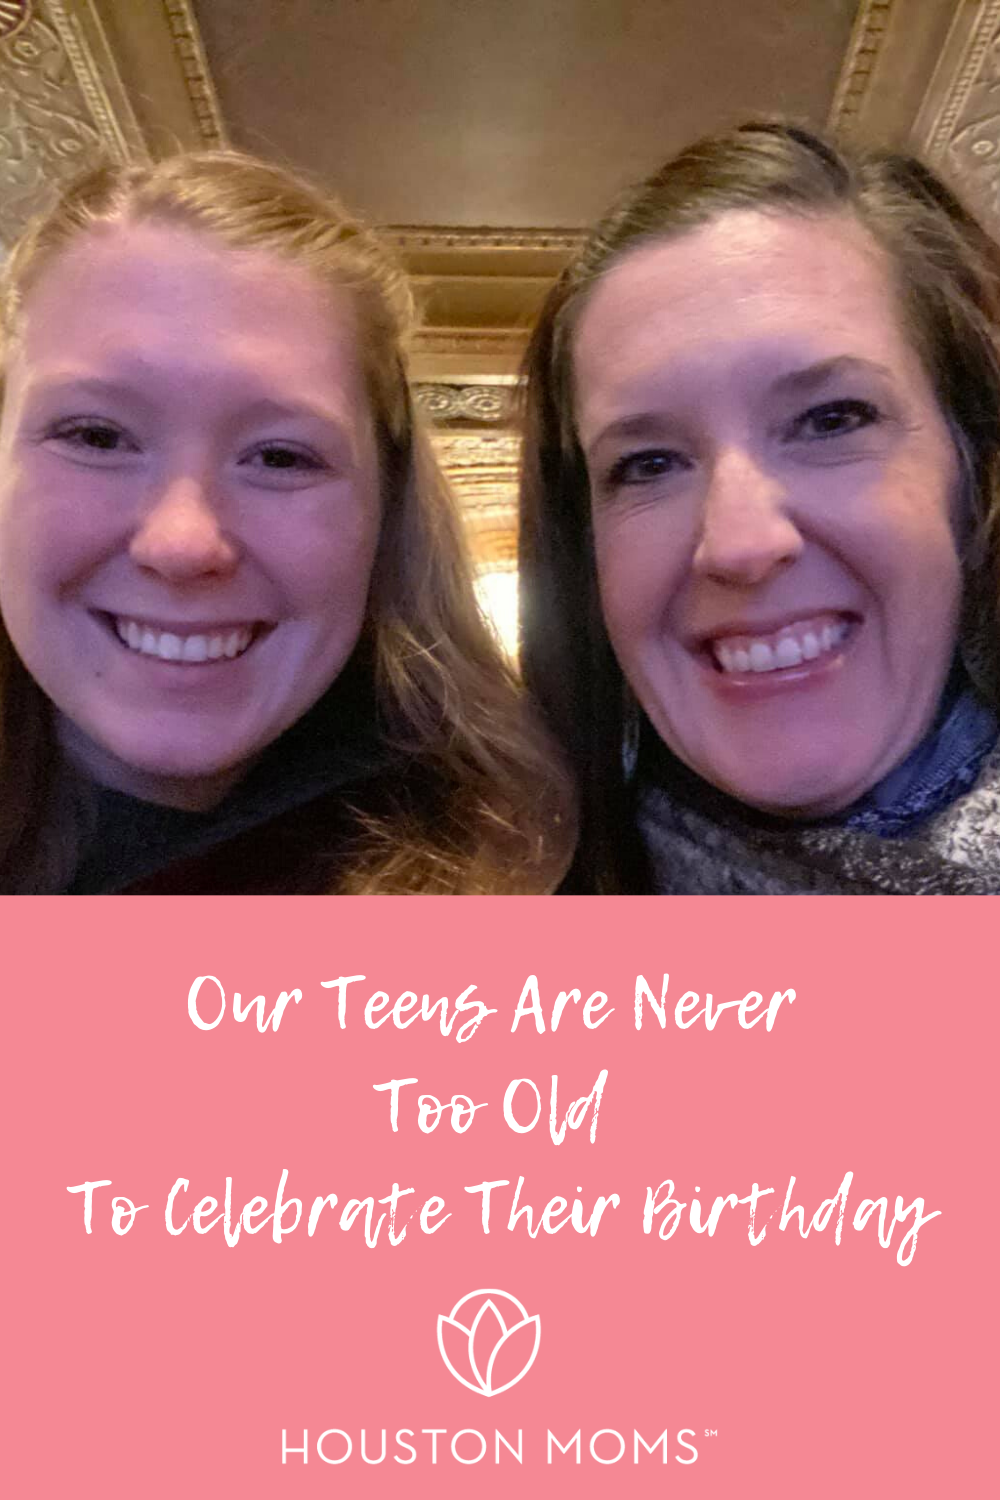 Houston Moms "Our Teens are Never Too old to Celebrate Their Birthday" #houstonmomsblog #houstonmoms #momsaroundhouston